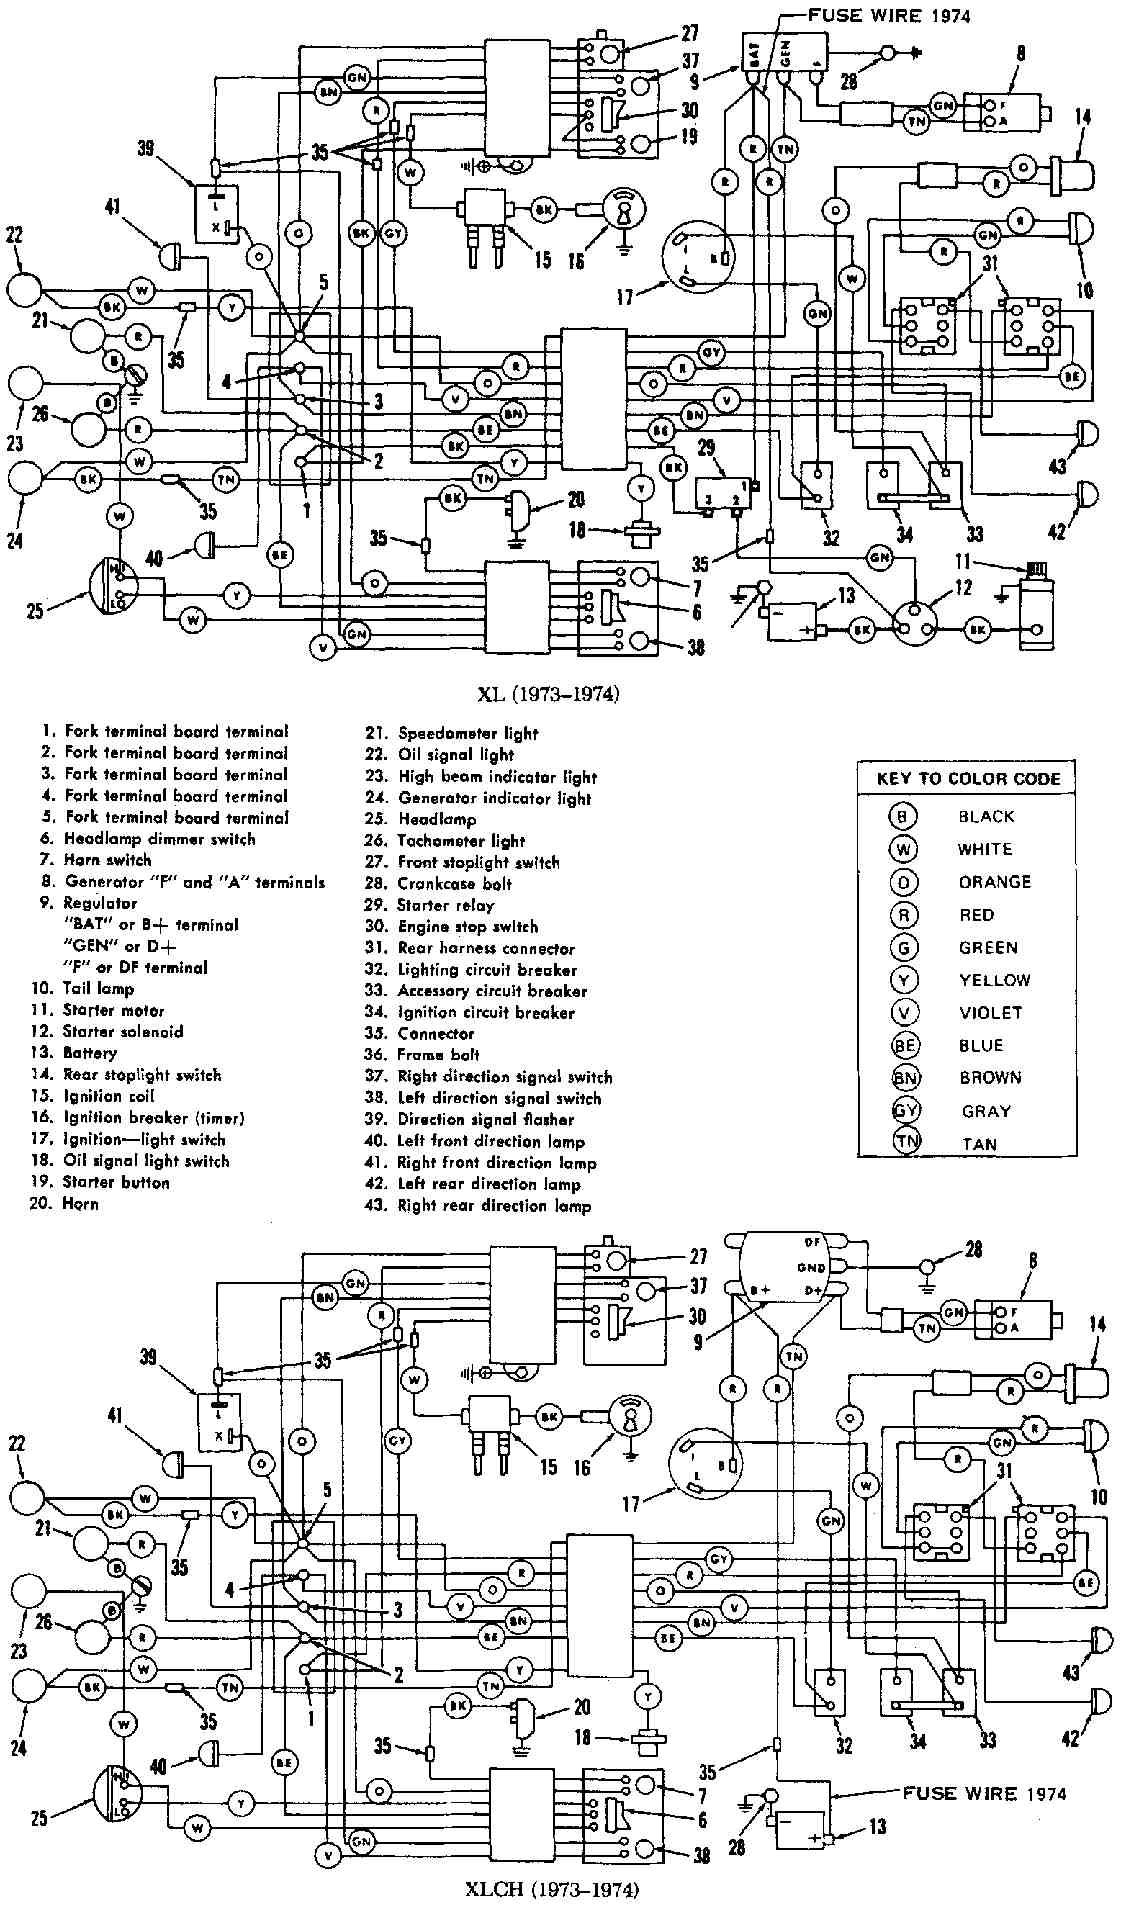 HARLEY DAVIDSON - Motorcycles Manual Pdf, Wiring Diagram & Fault Codes  2015 Harley Road King Ignition Wiring Diagram    MOTORCYCLE Manuals PDF & Wiring Diagrams